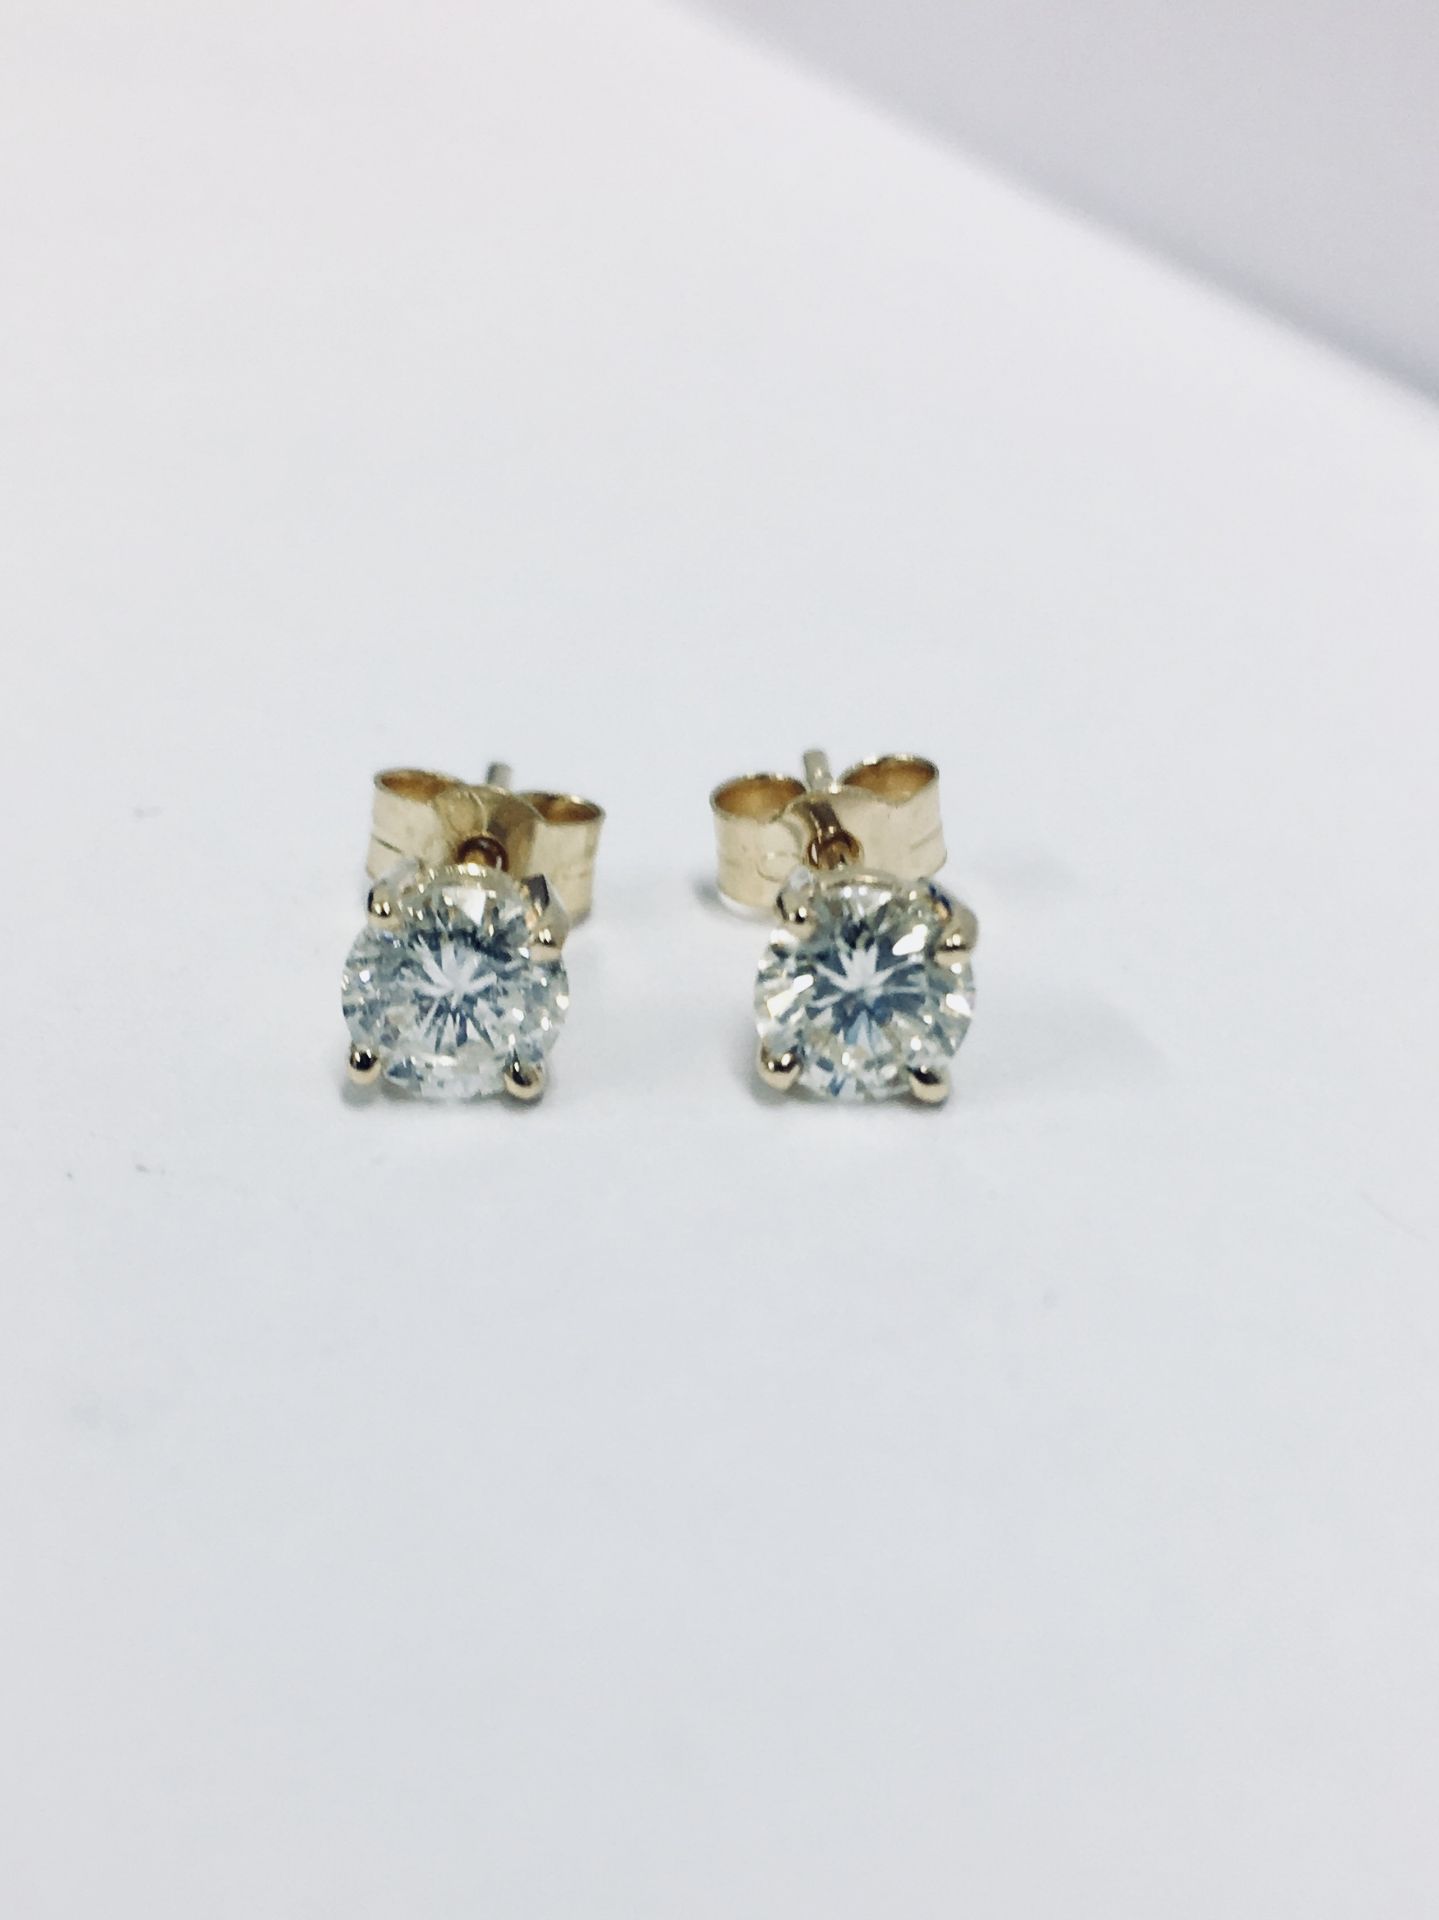 1ct diamond solitaire earrings,2 x 0.50ct h colour vs grade (enhanced diamonds) 2gms 18ct yellow .uk - Image 4 of 4